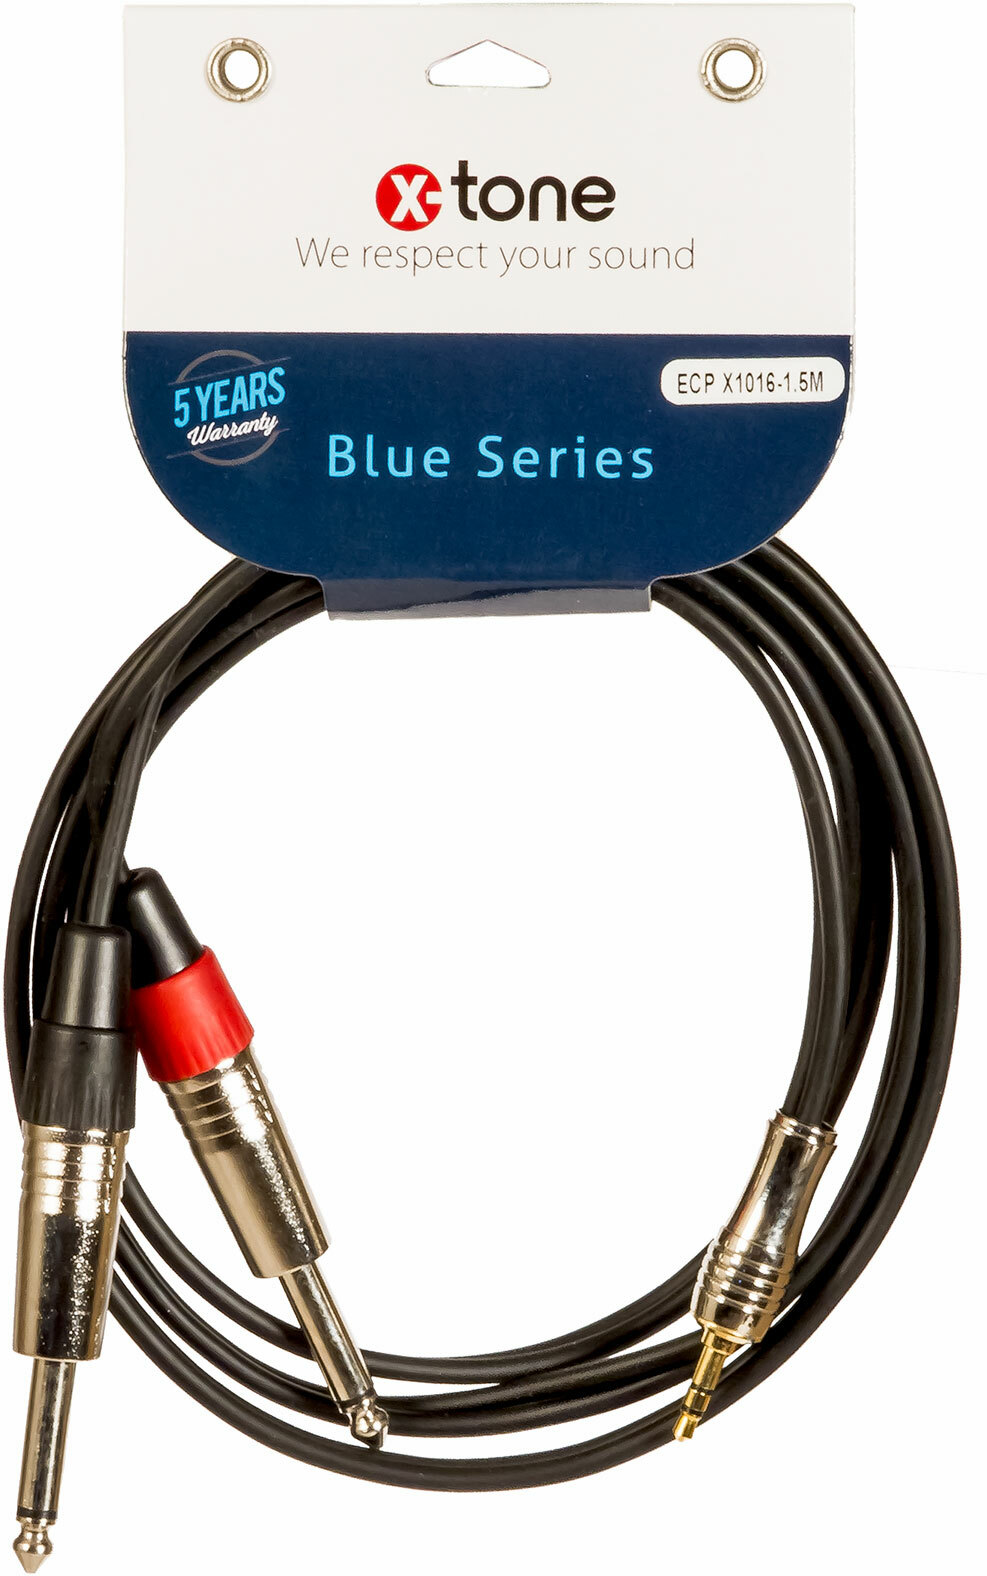 X-tone Mini Jack St / 2 Jack 1.5m Blue Series (x1016-1.5m) - Cable - Main picture